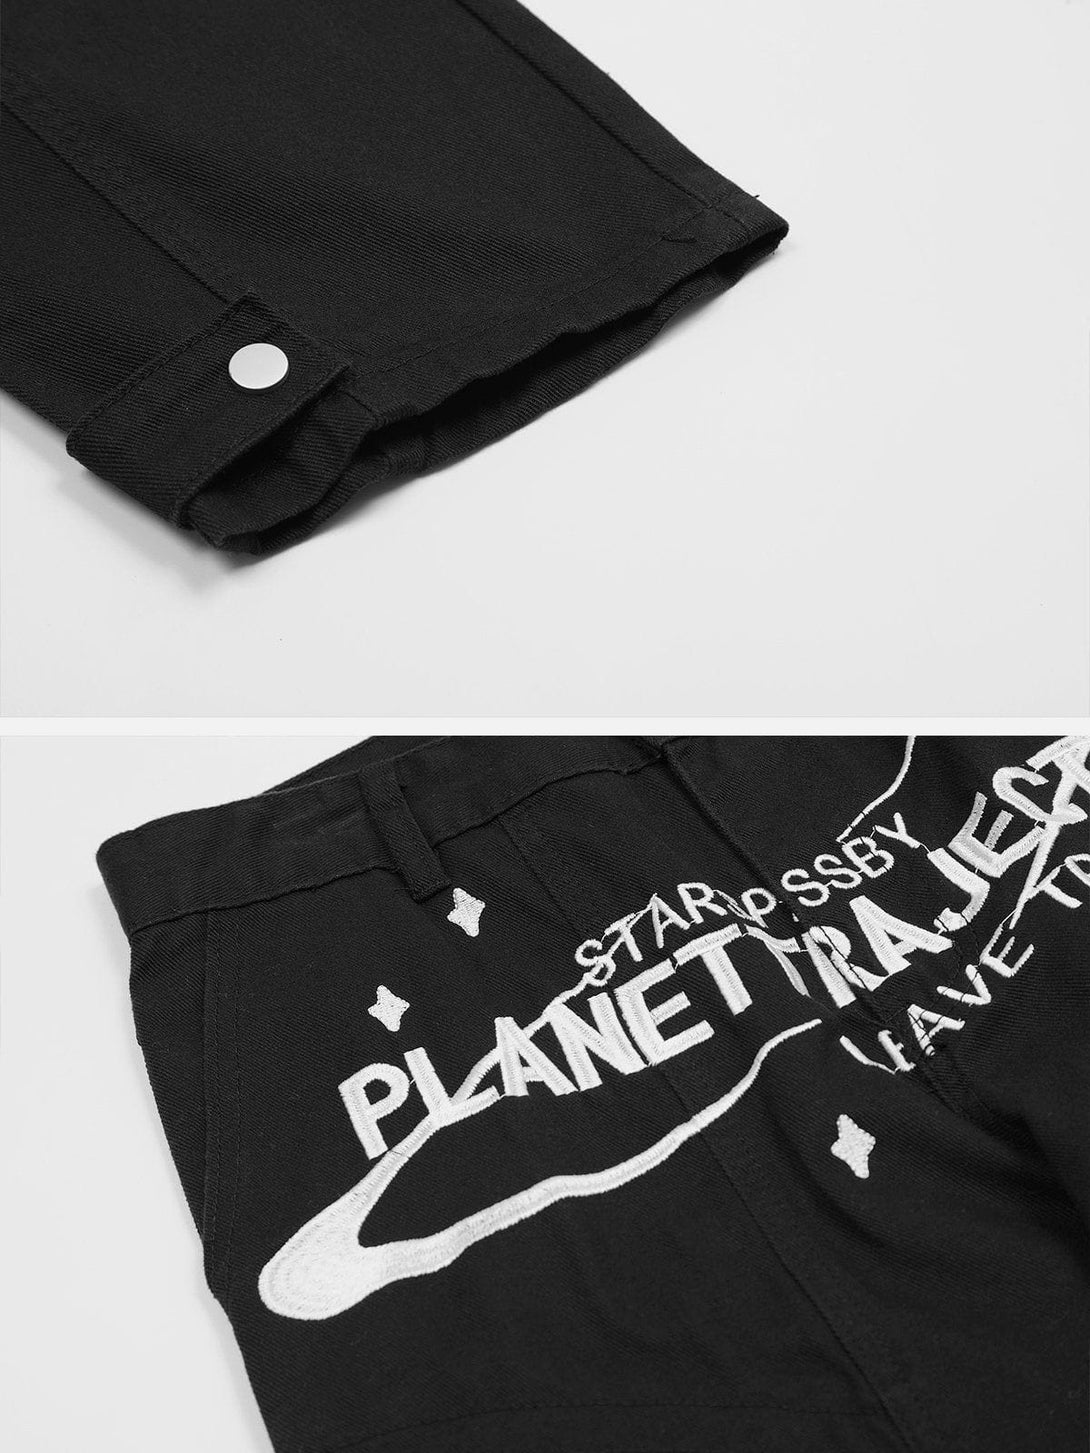 Majesda® - planetary trajectory Graphic Pants outfit ideas streetwear fashion